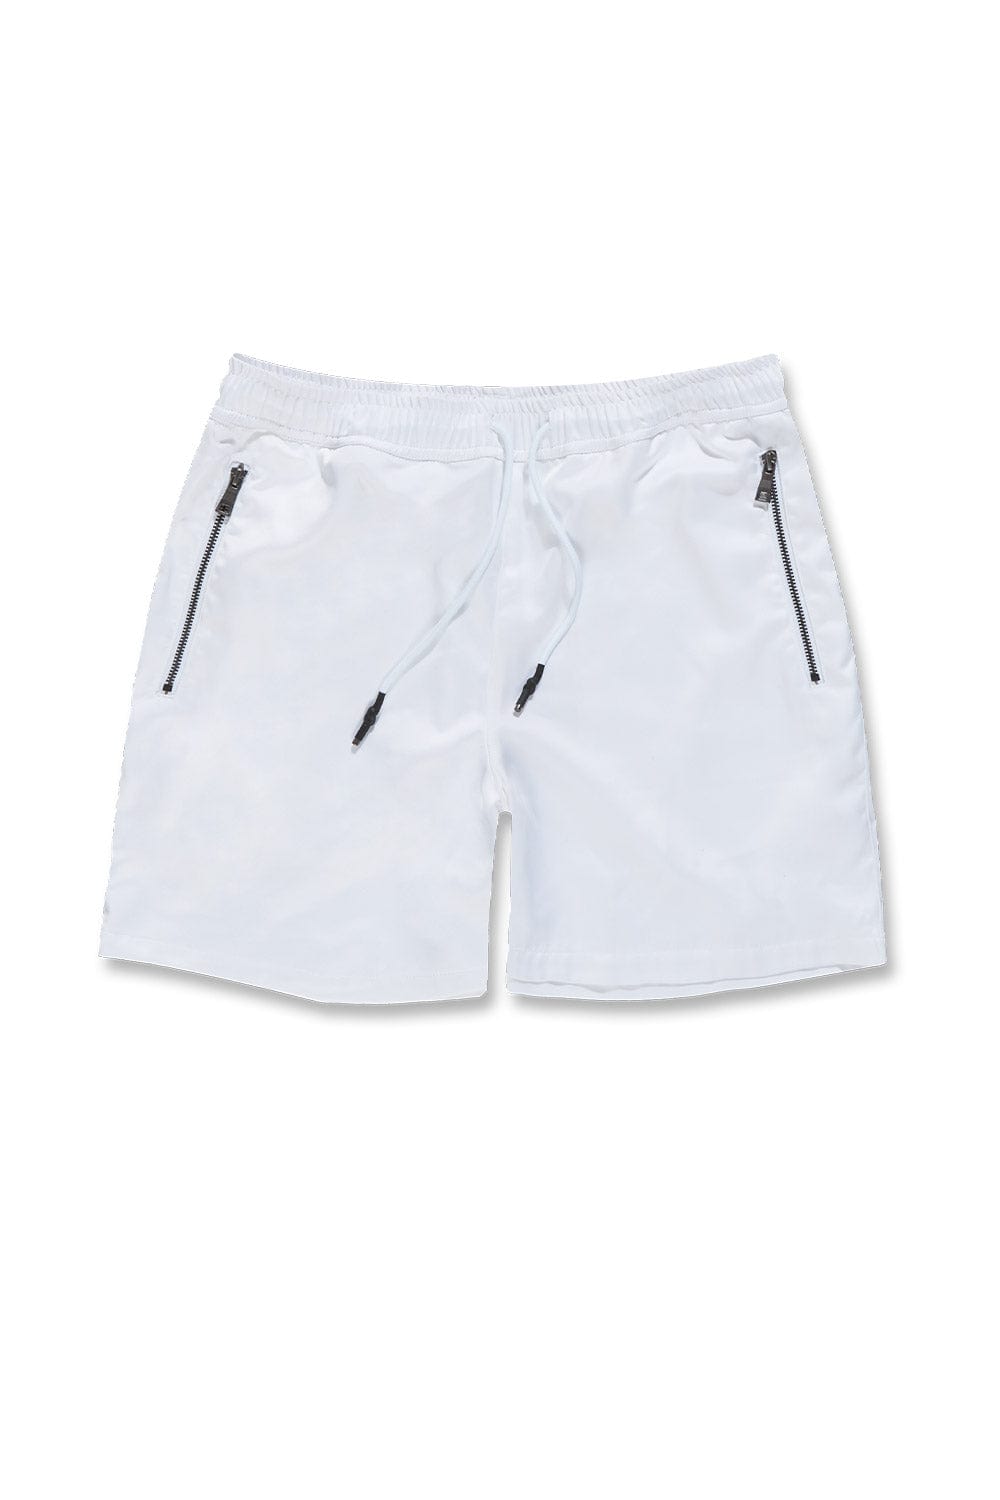 Jordan Craig Athletic - Lux Shorts White / S